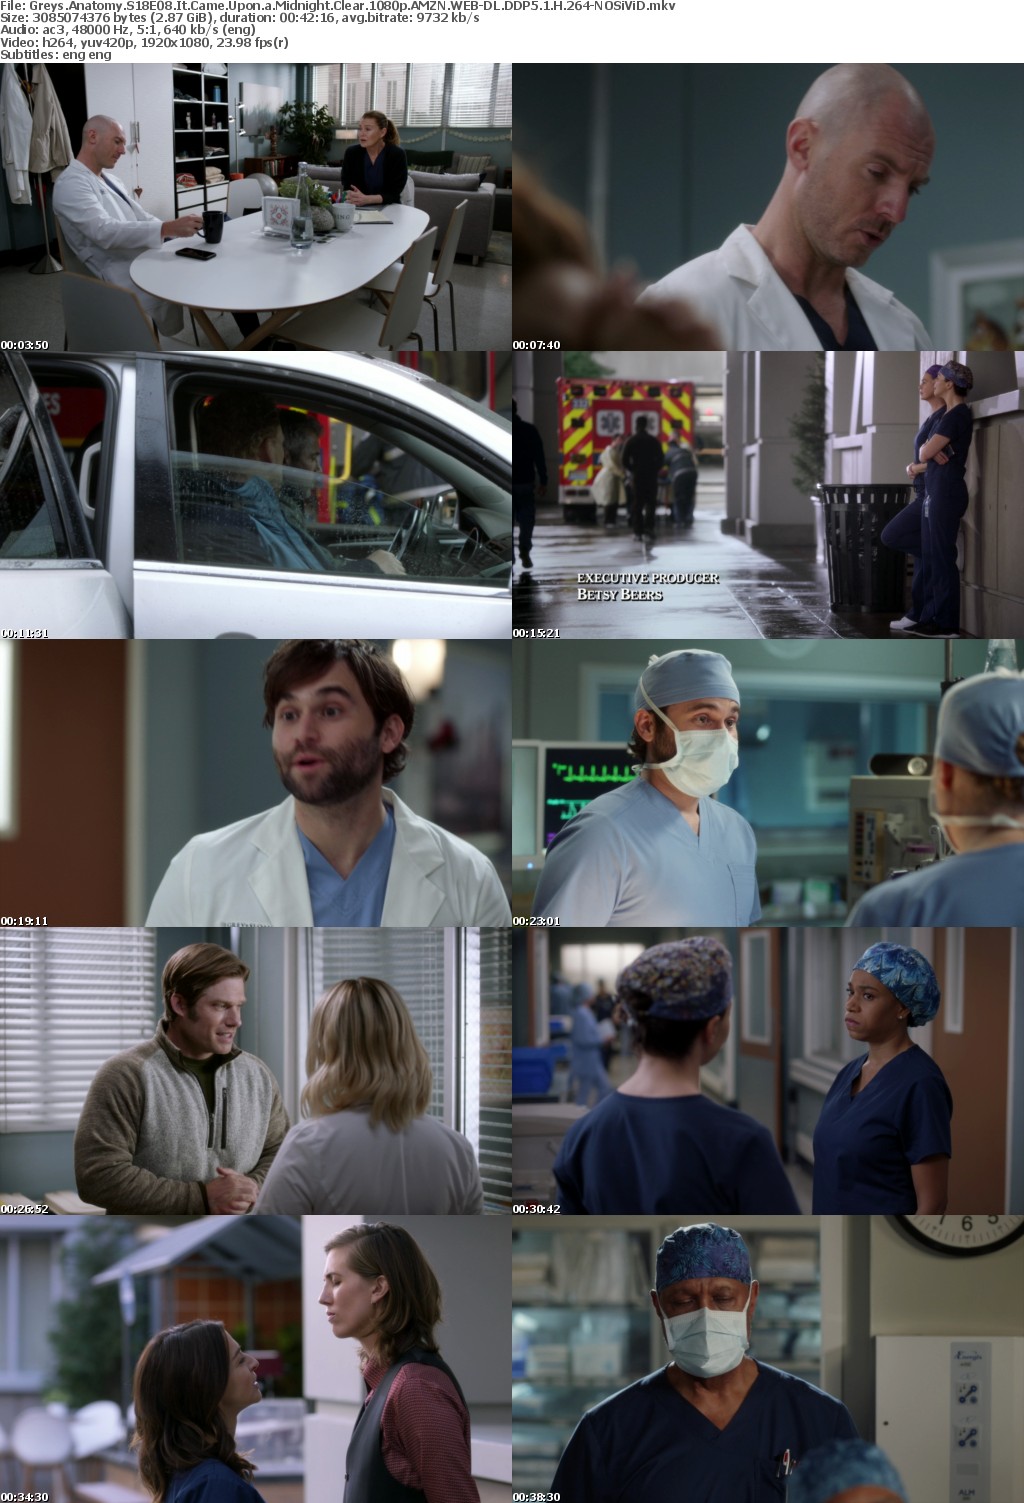 Greys Anatomy S18E08 It Came Upon a Midnight Clear 1080p AMZN WEBRip DDP5 1 x264-NOSiViD